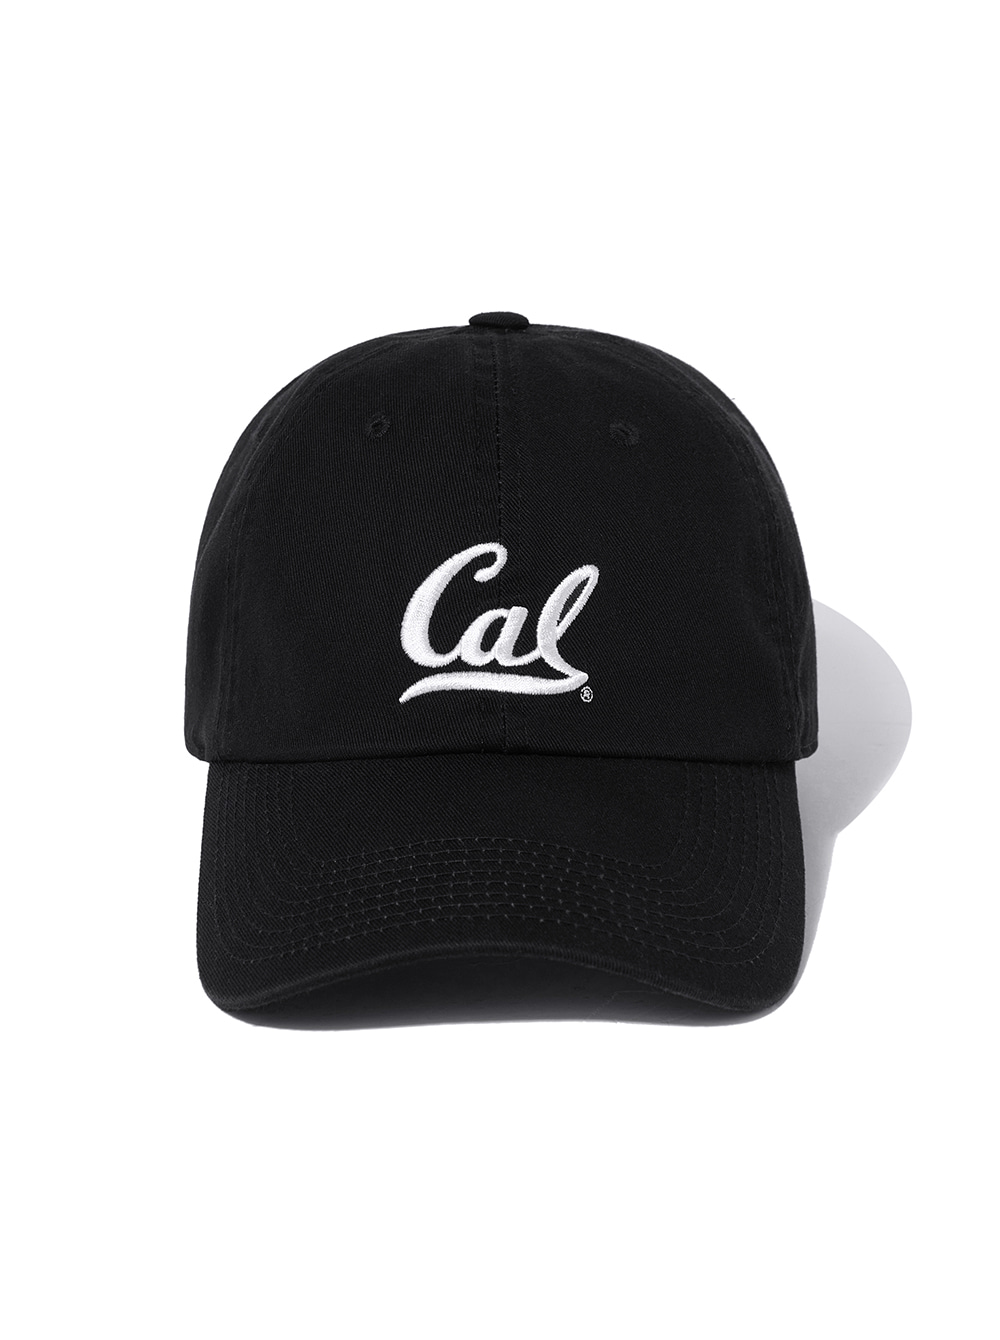 CAL SYMBOL CAP [BLACK]